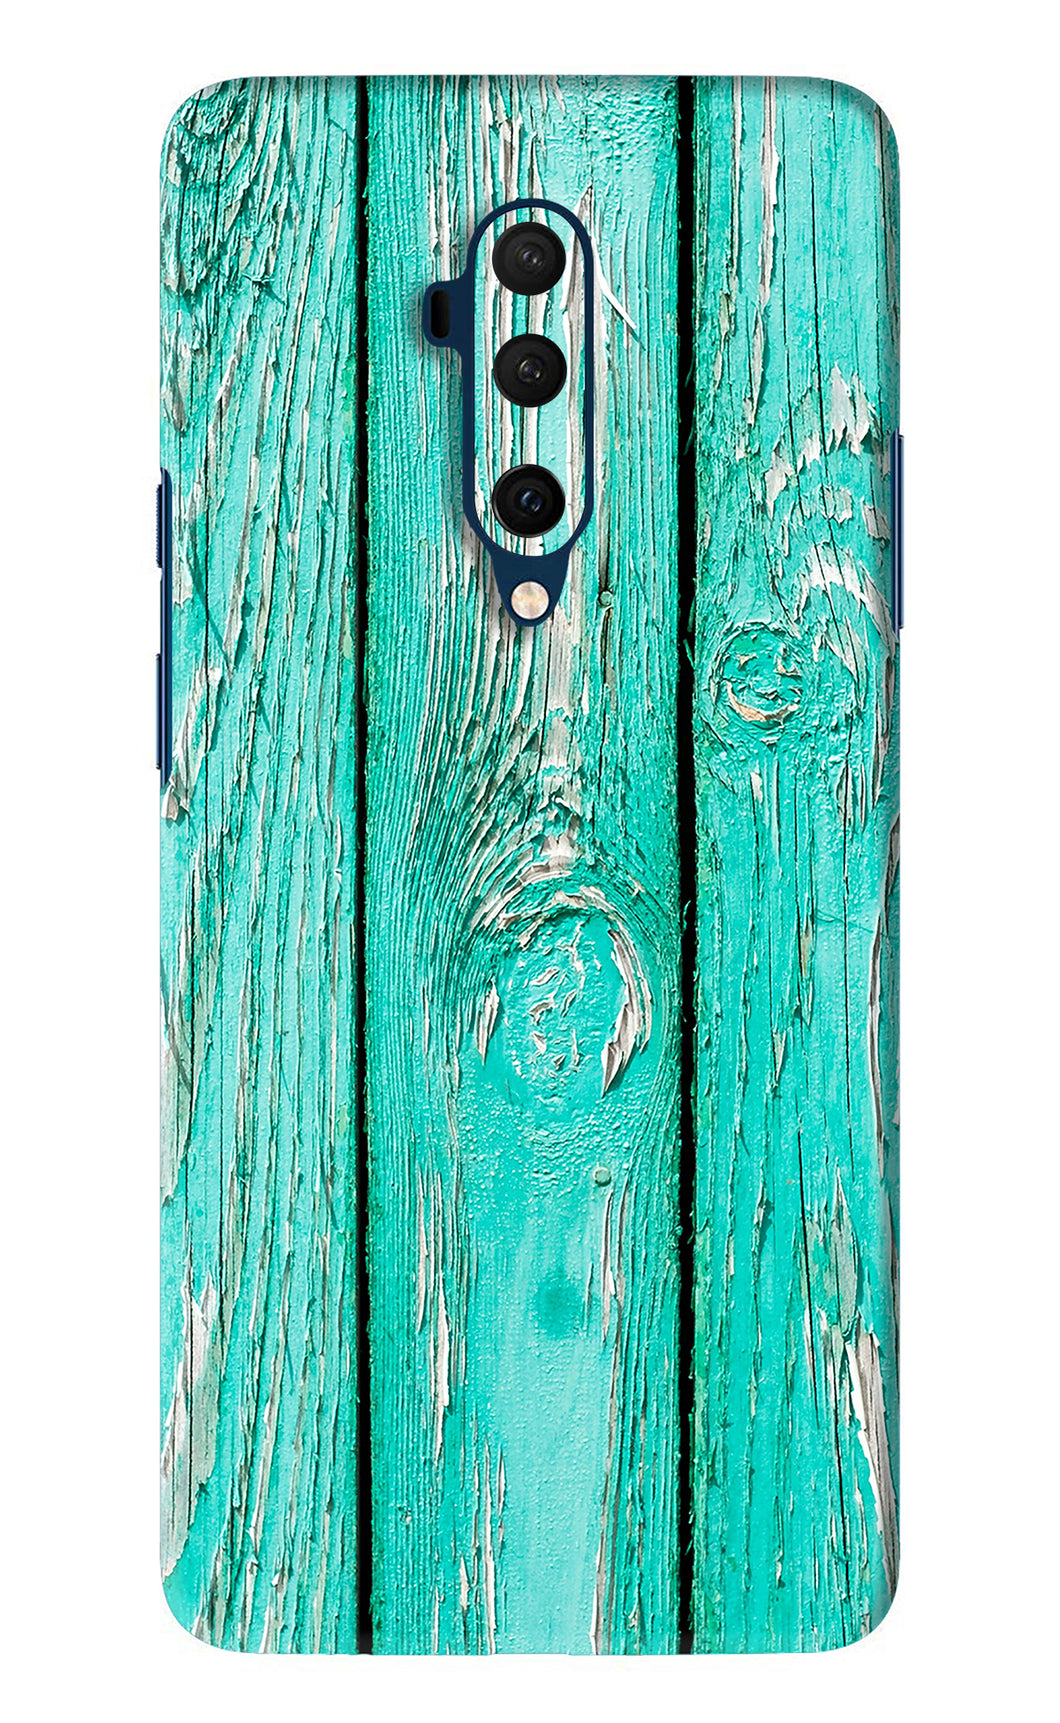 Blue Wood OnePlus 7T Pro Back Skin Wrap